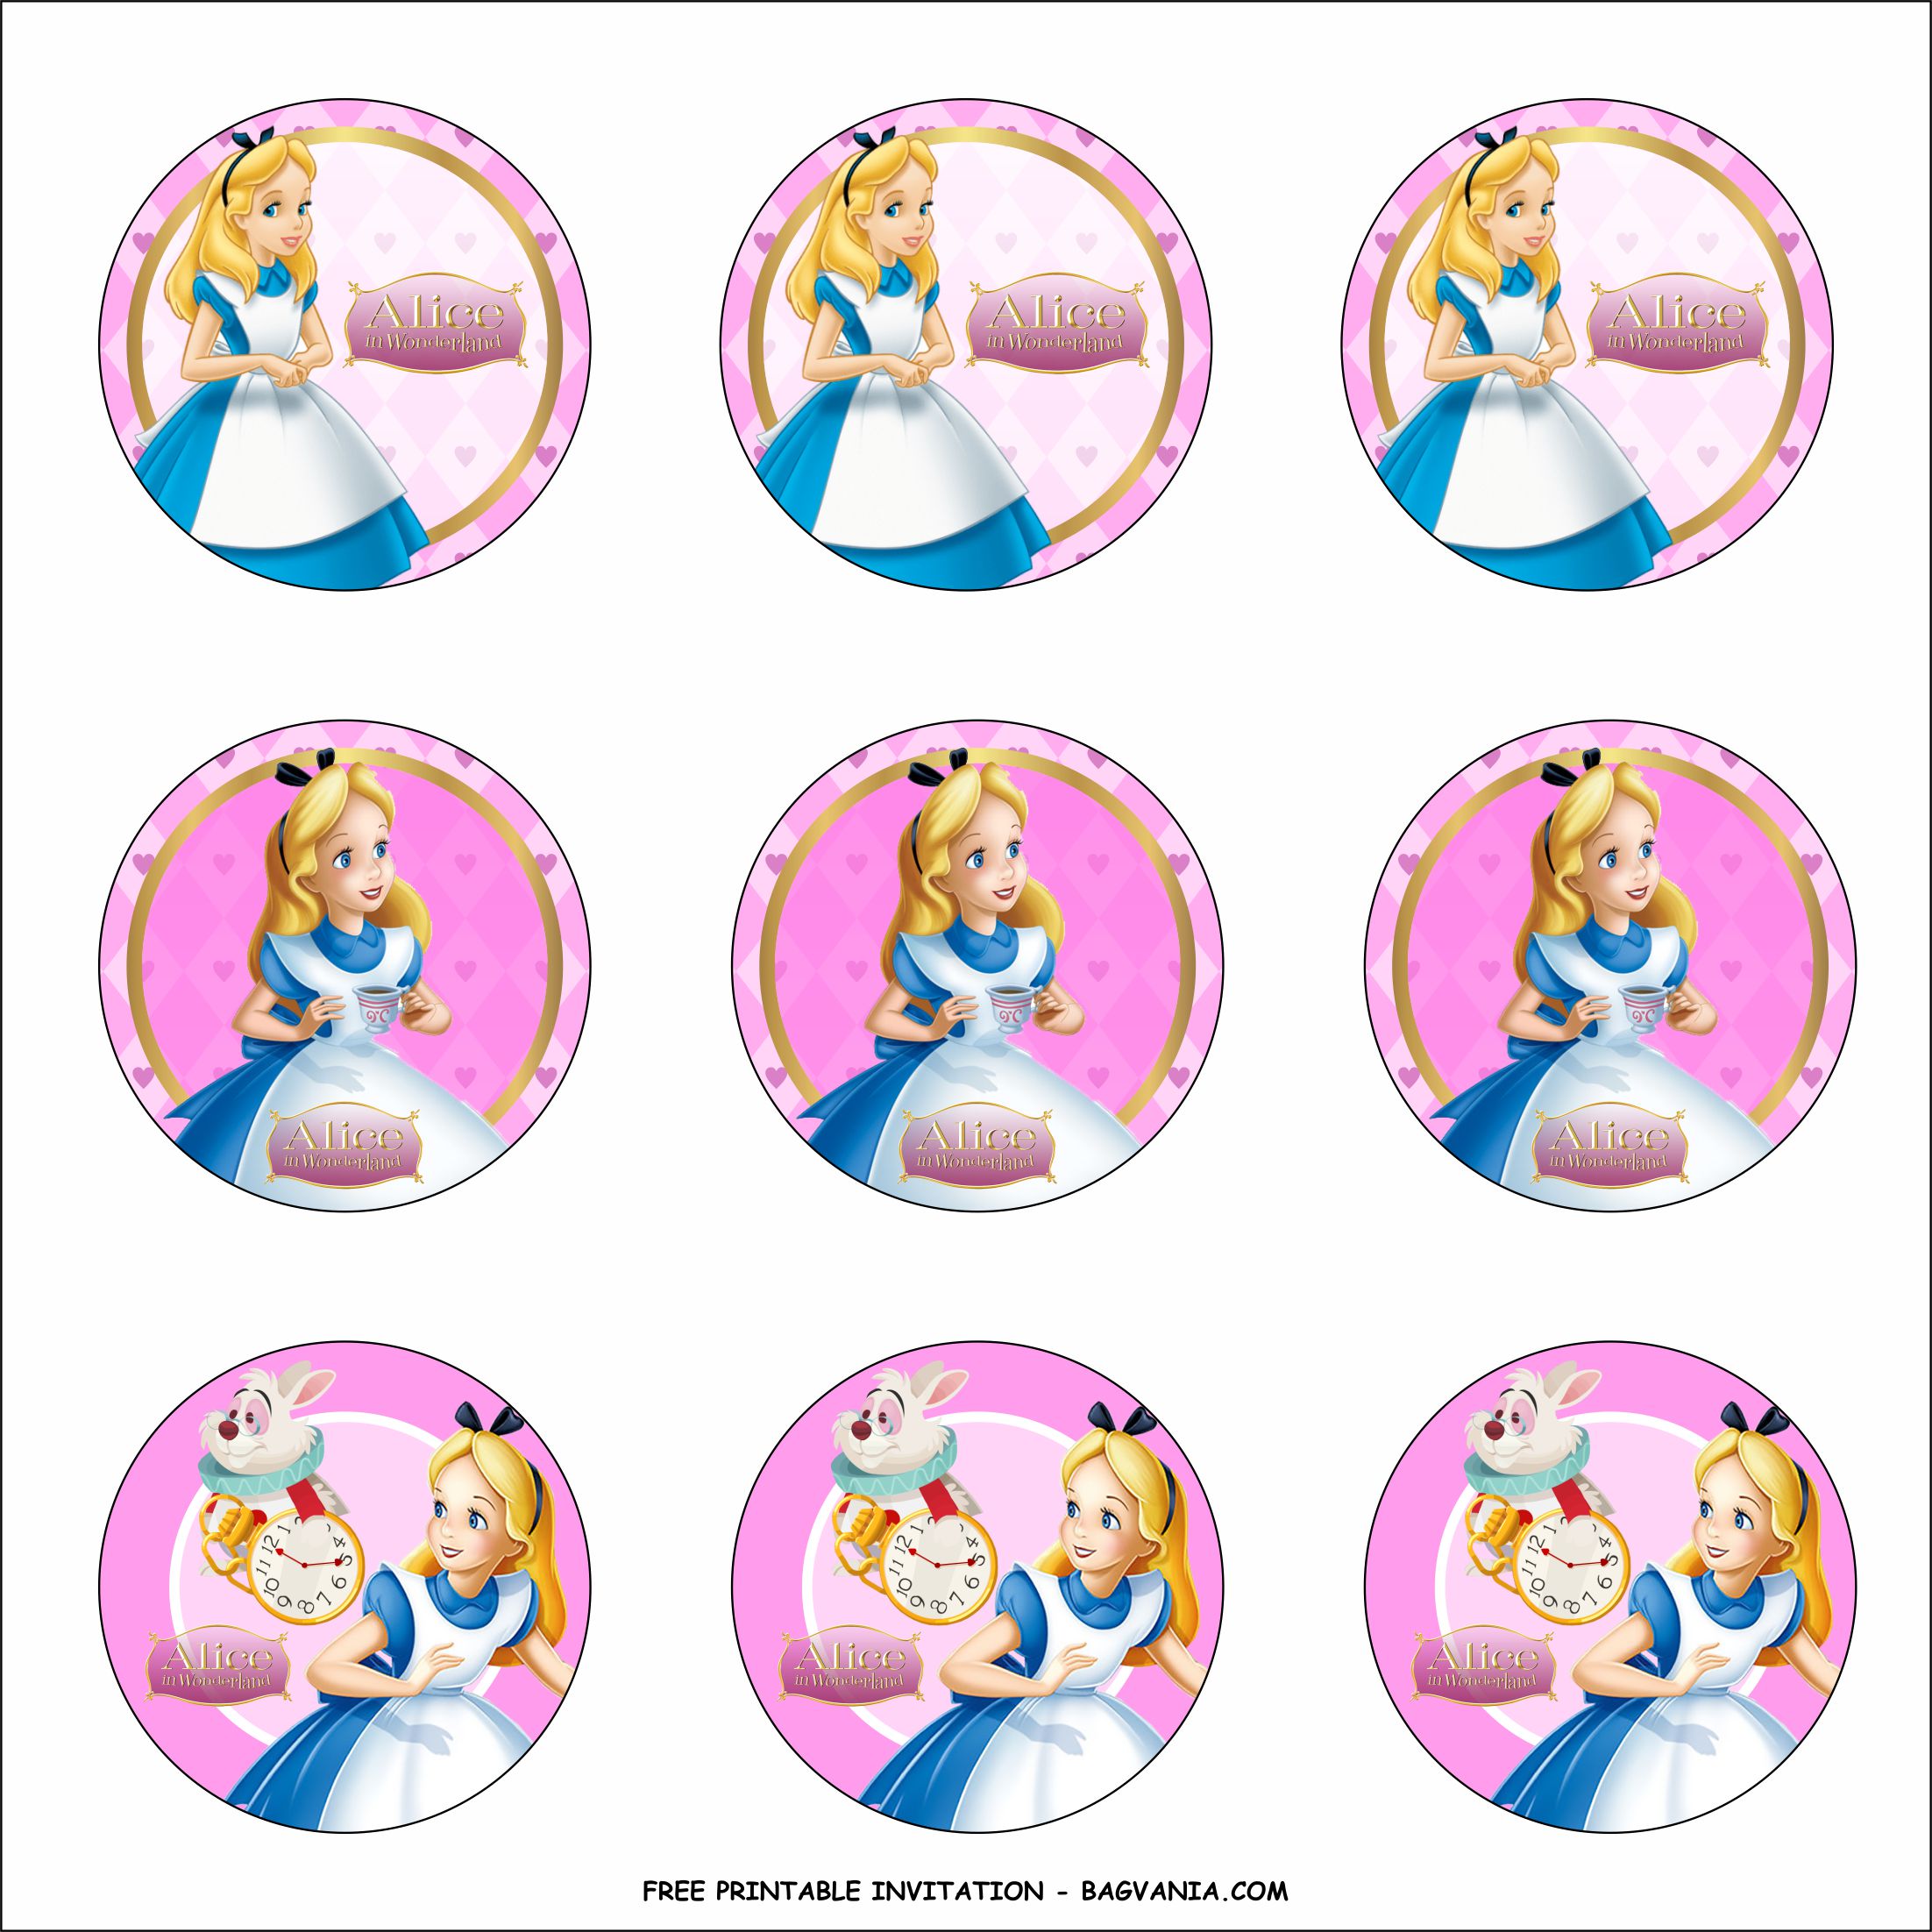 Alice In Wonderland Cupcake Toppers Templates Free Printable Birthday Invitation Templates Bagvania